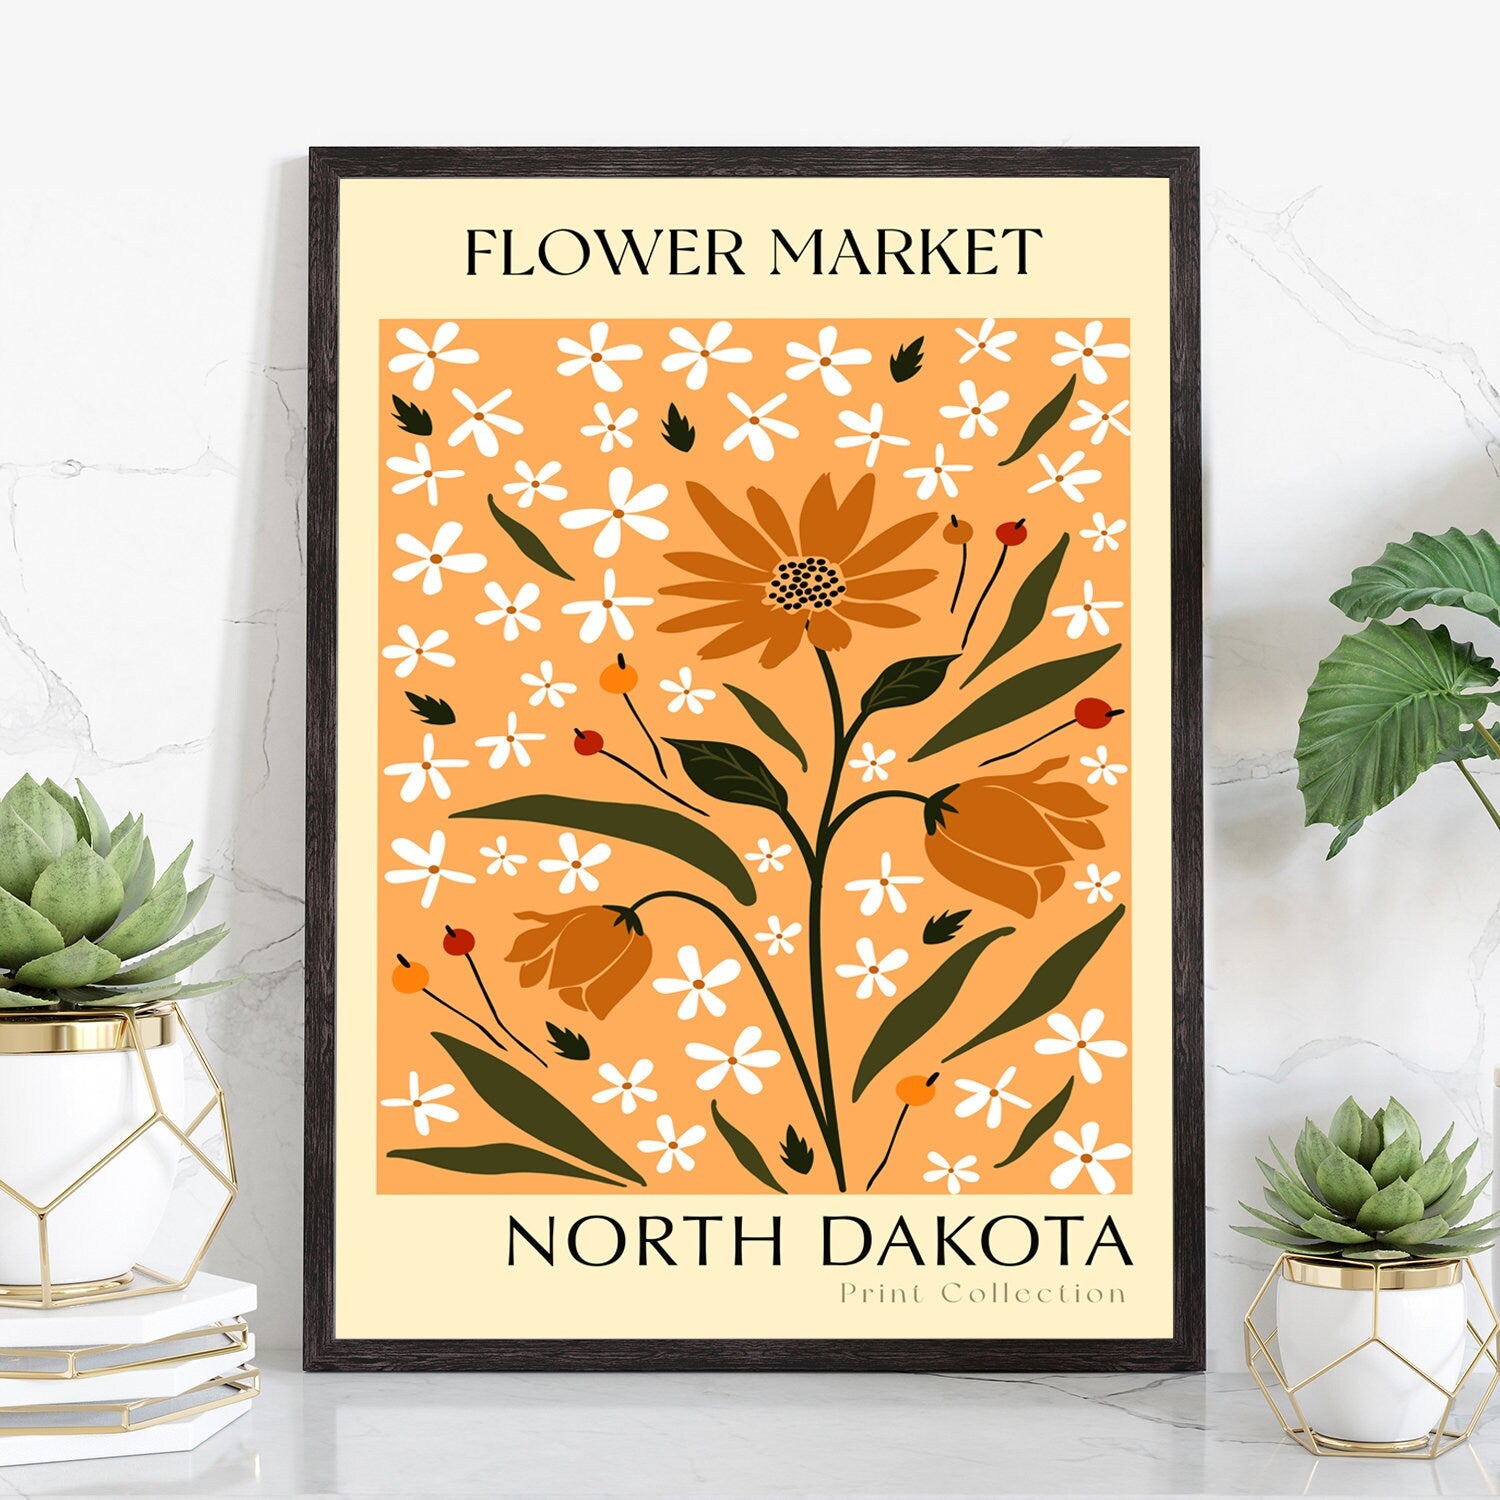 North Dakota State flower print, States poster, North Dakota flower market poster, Botanical posters, Nature poster artwork, Floral wall art